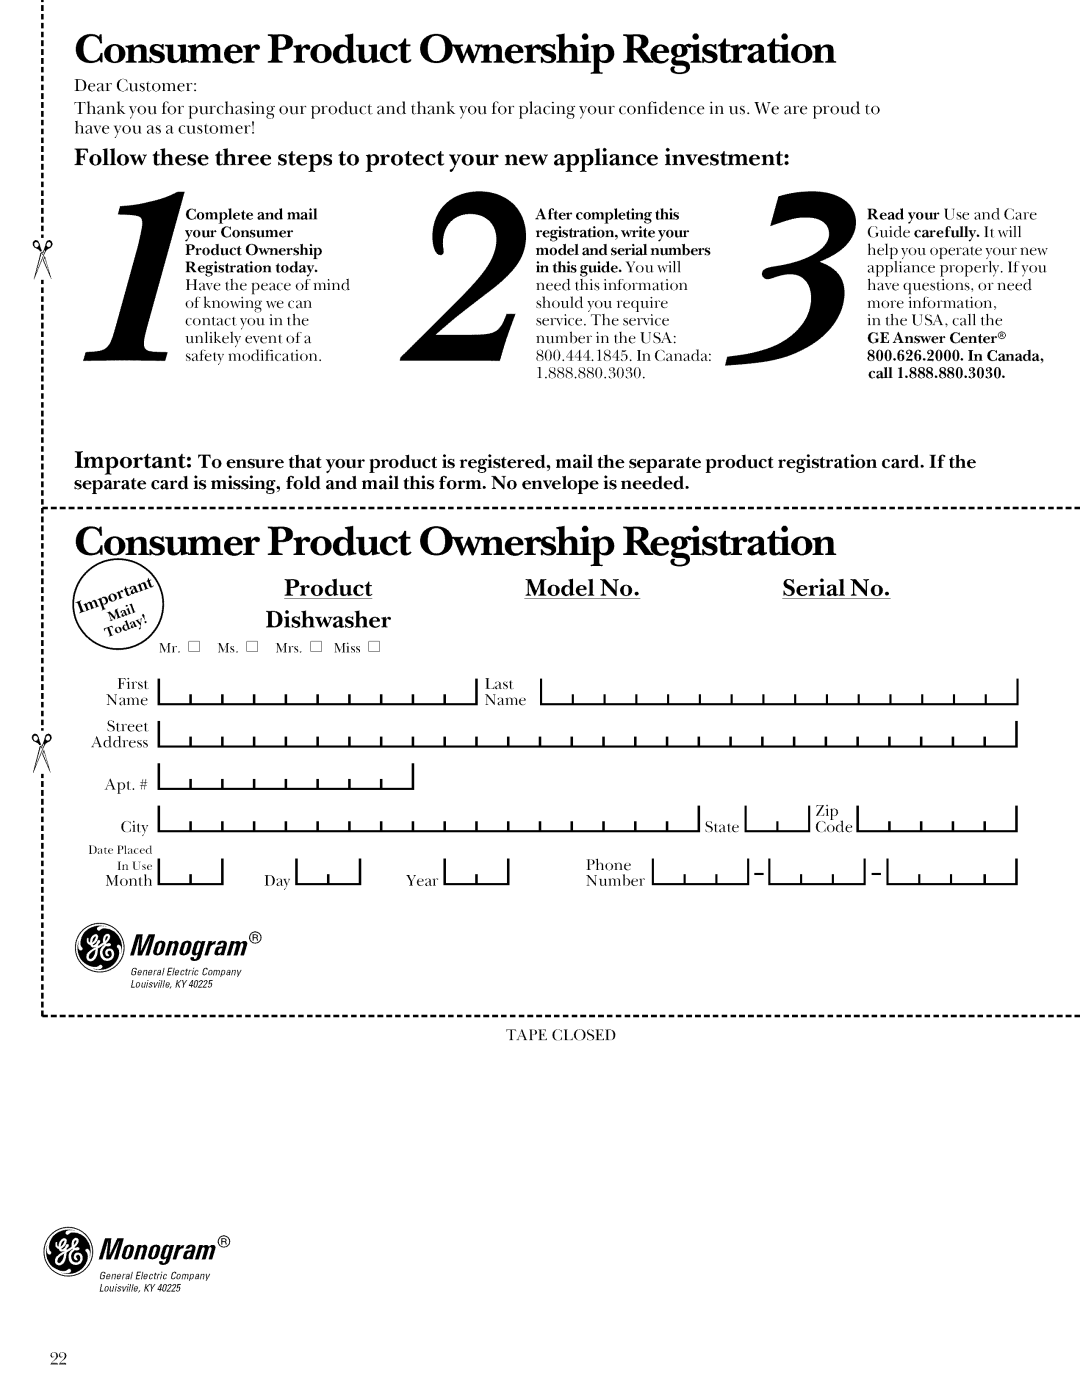 GE ZBD3500 manual First, Consumer Product Ownership Registration, I _arII YearlI, Monogram, leastName, Dishwasher, Model No 